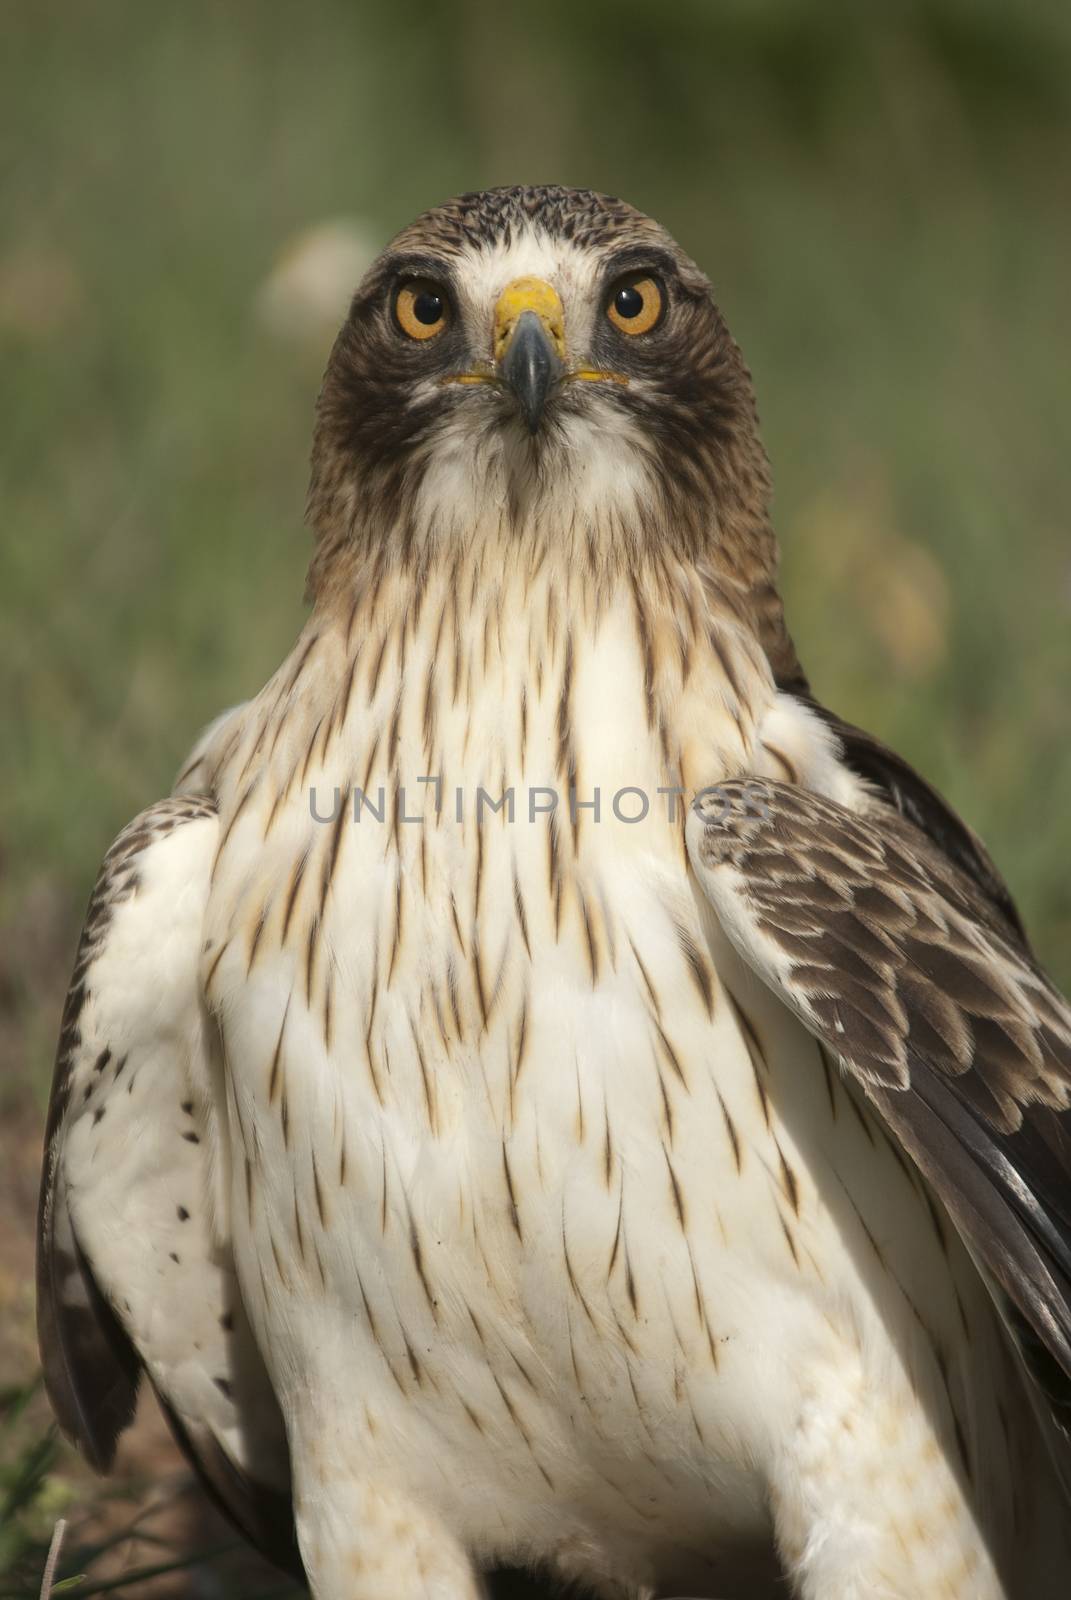 Painted eagle, pale morph, Aquila pennata, portrait  by jalonsohu@gmail.com